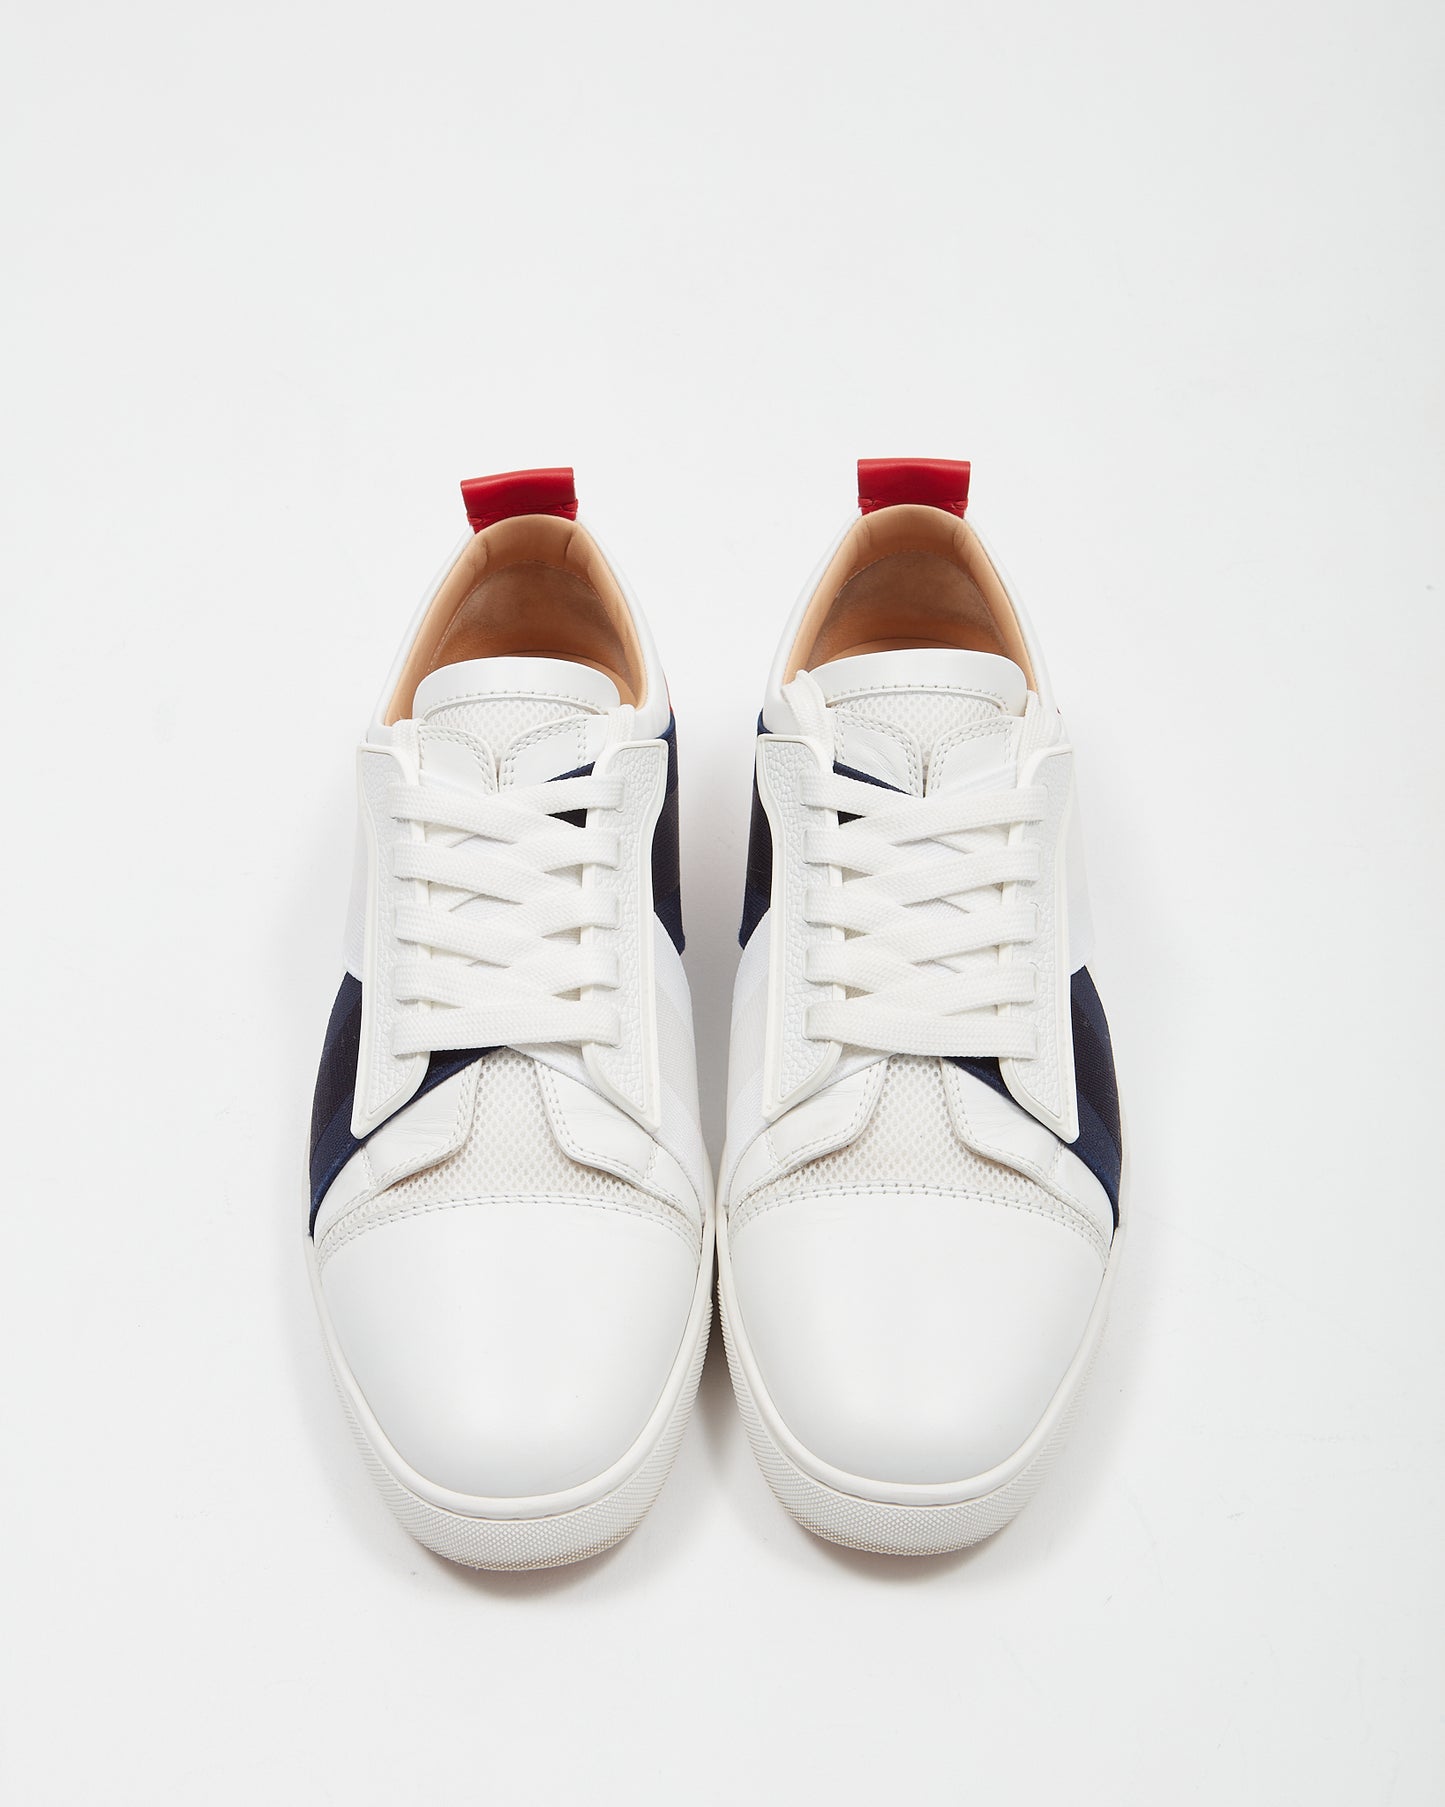 Louboutin Men's White/Red/Black  Elastikid Sneaker - 44.5